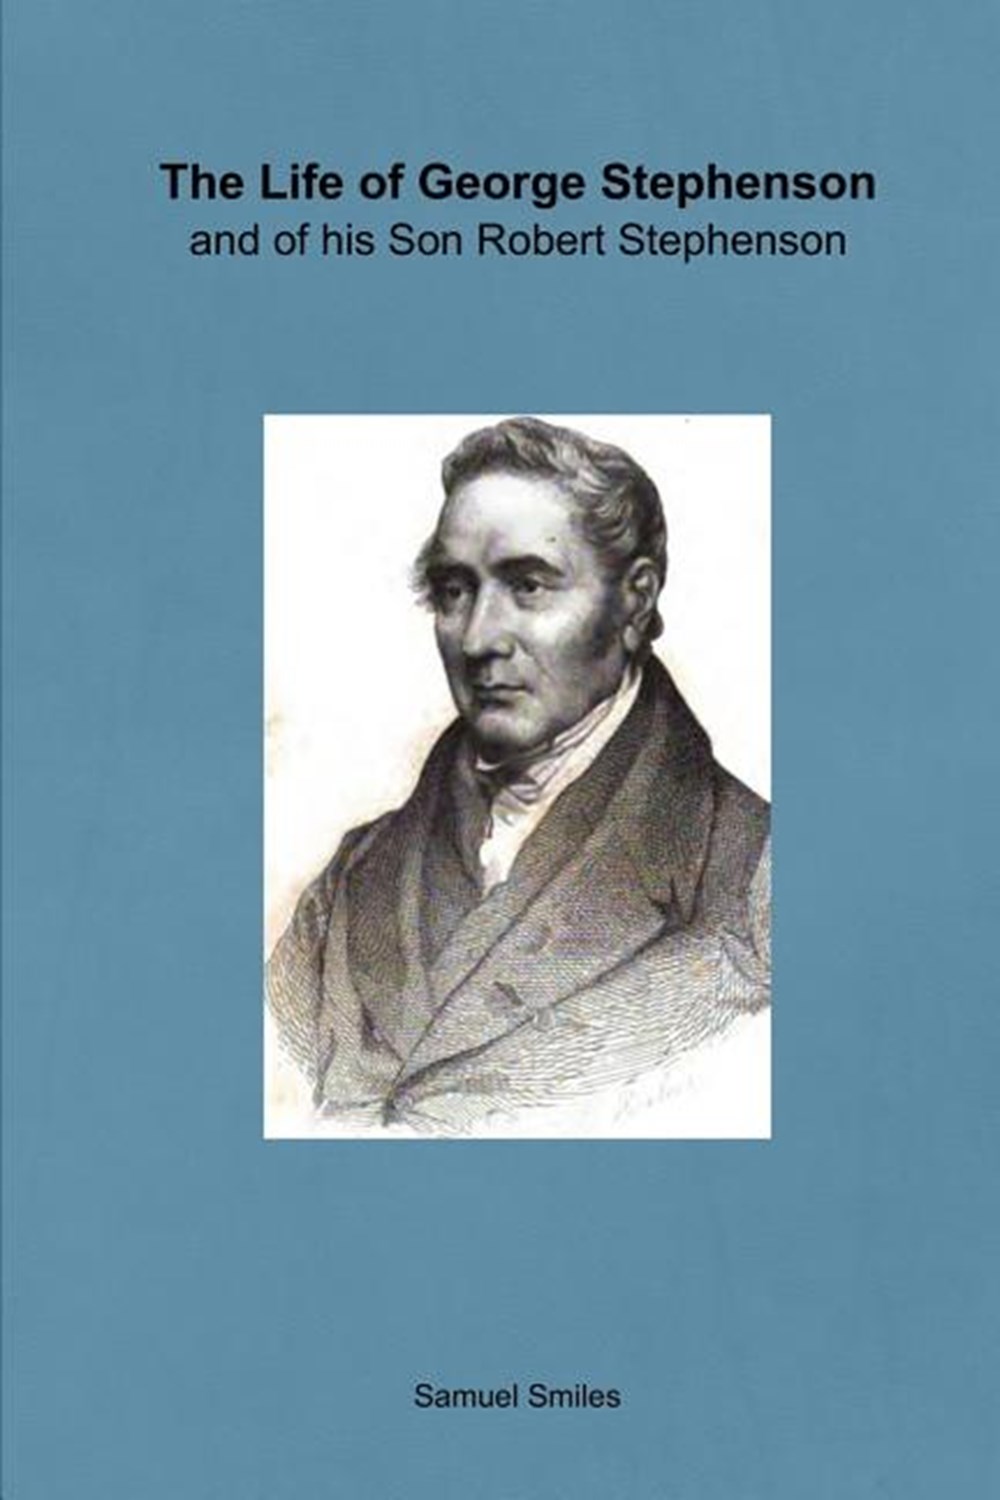 Life of George Stephenson and of his Son Robert Stephenson